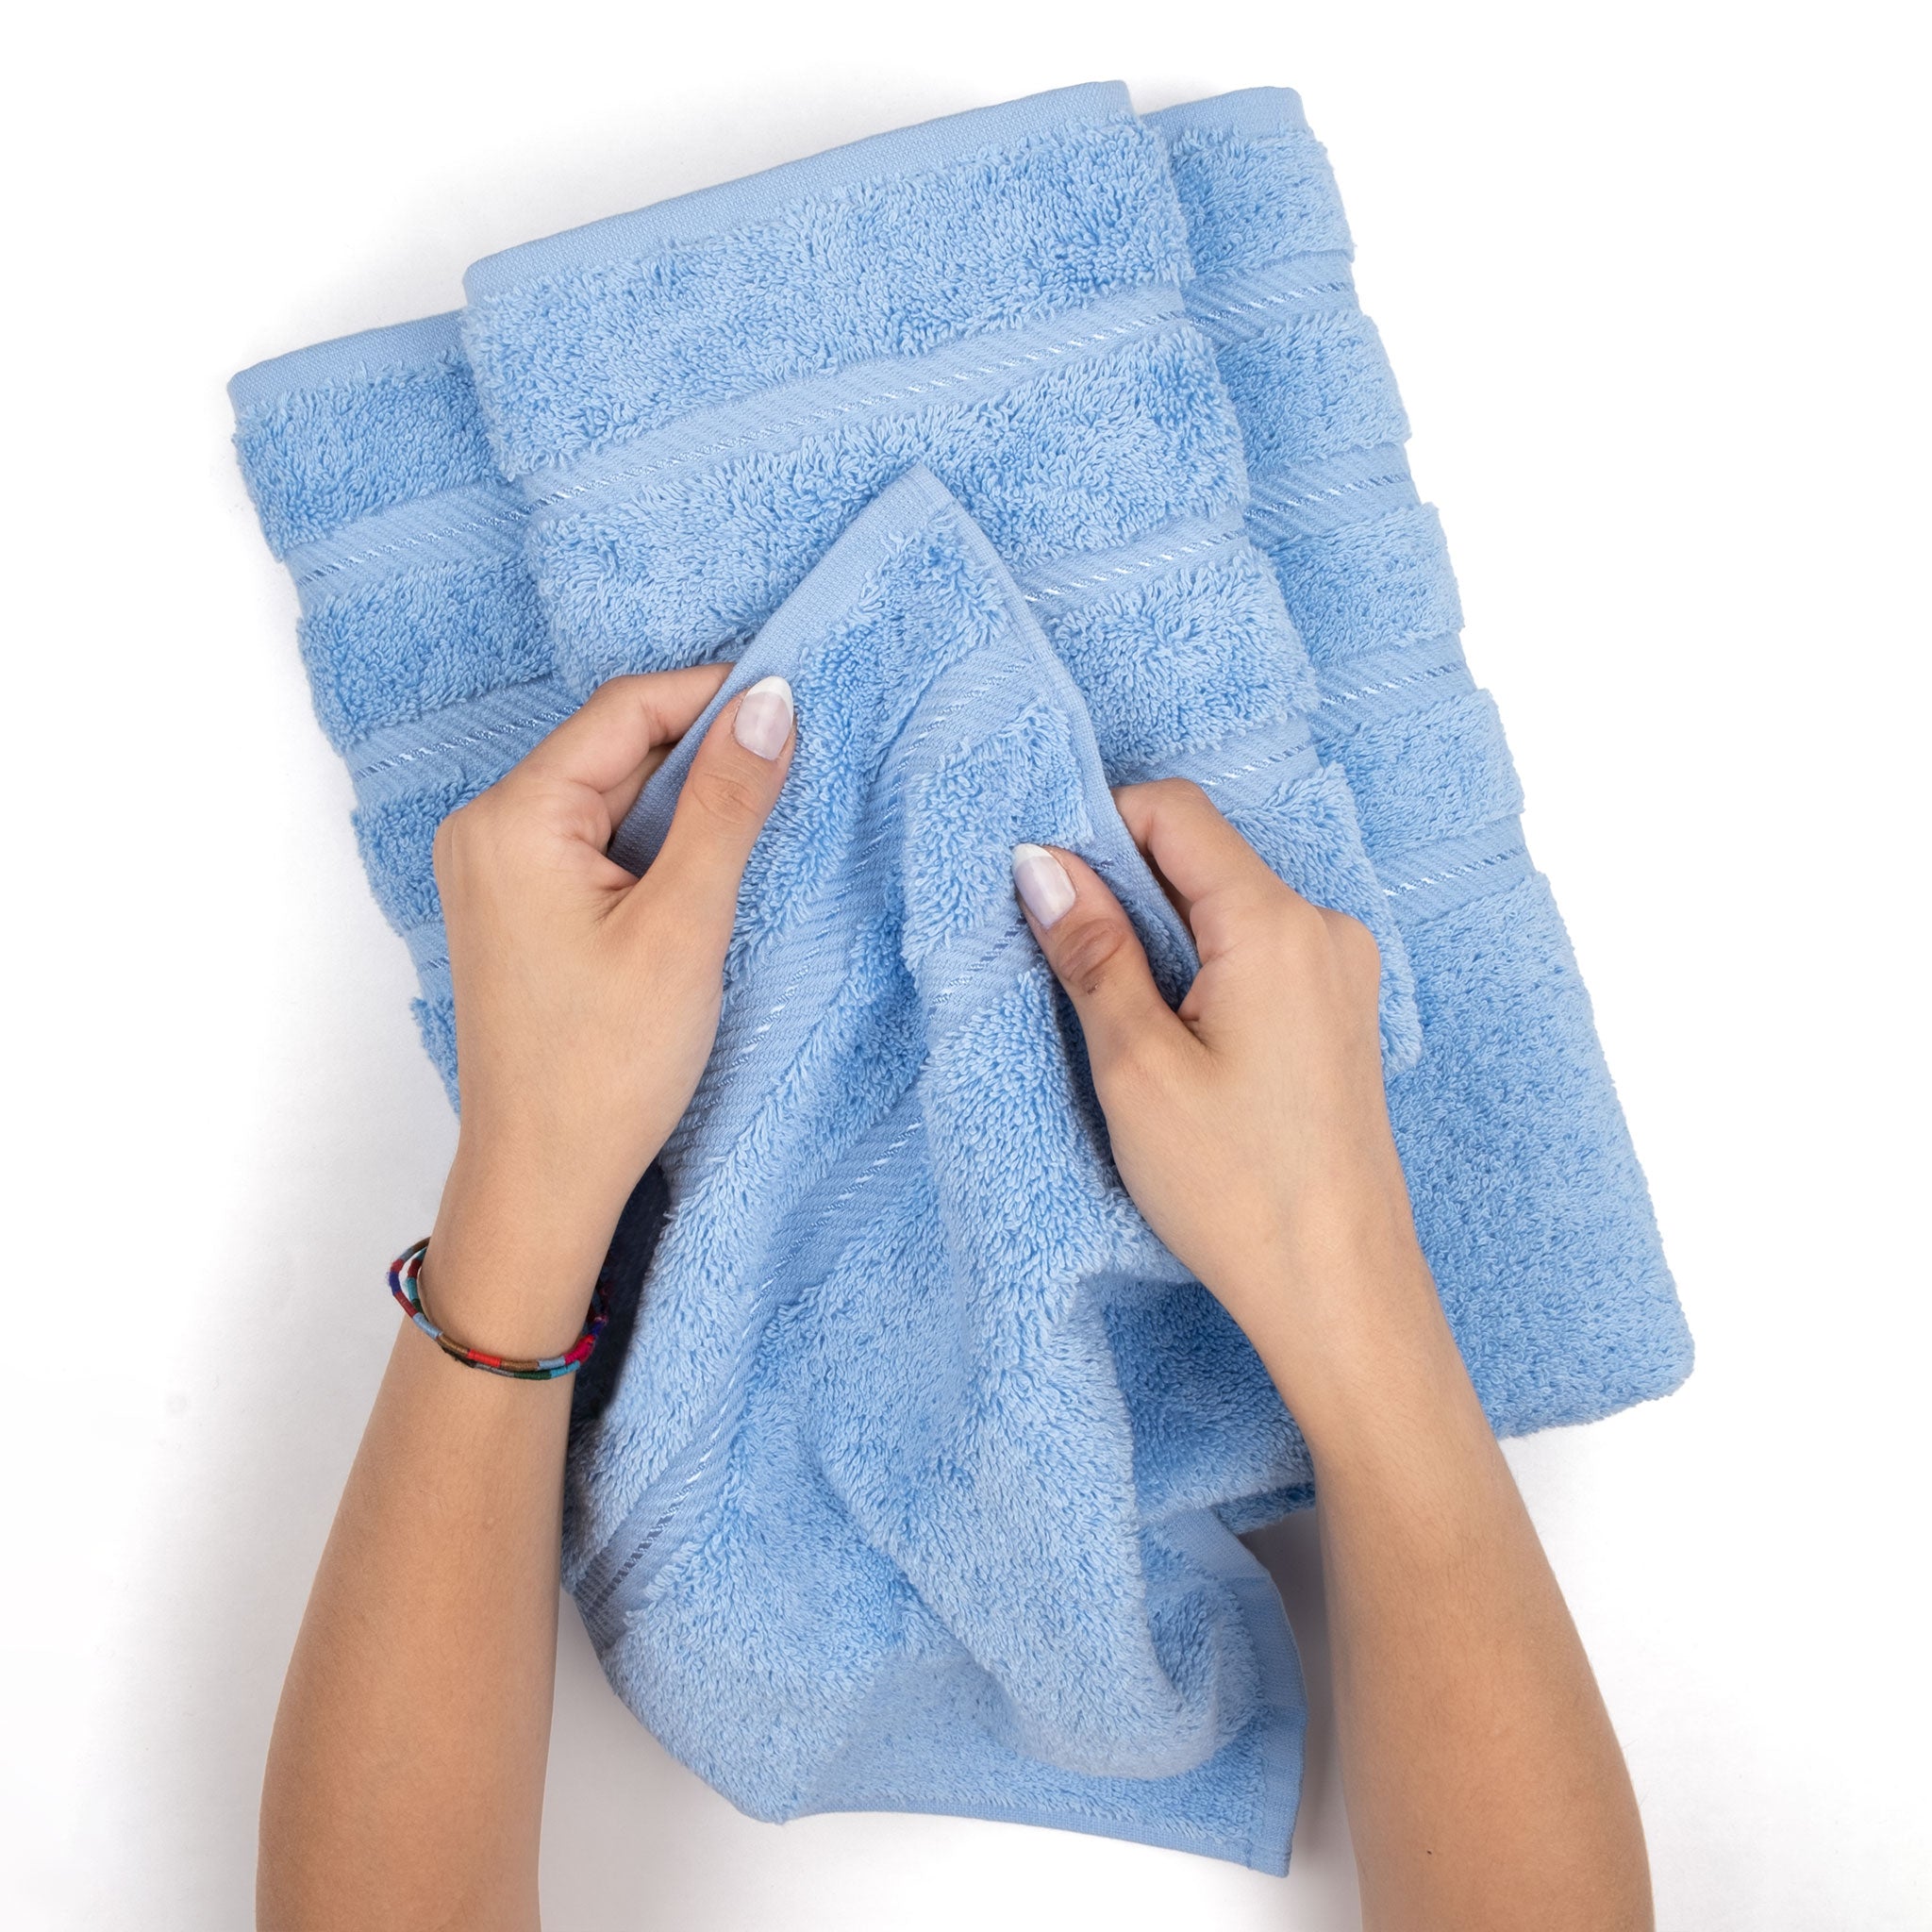 American Soft Linen - 35x70 Jumbo Bath Sheet Turkish Bath Towel - 16 Piece Case Pack - Sky-Blue - 4